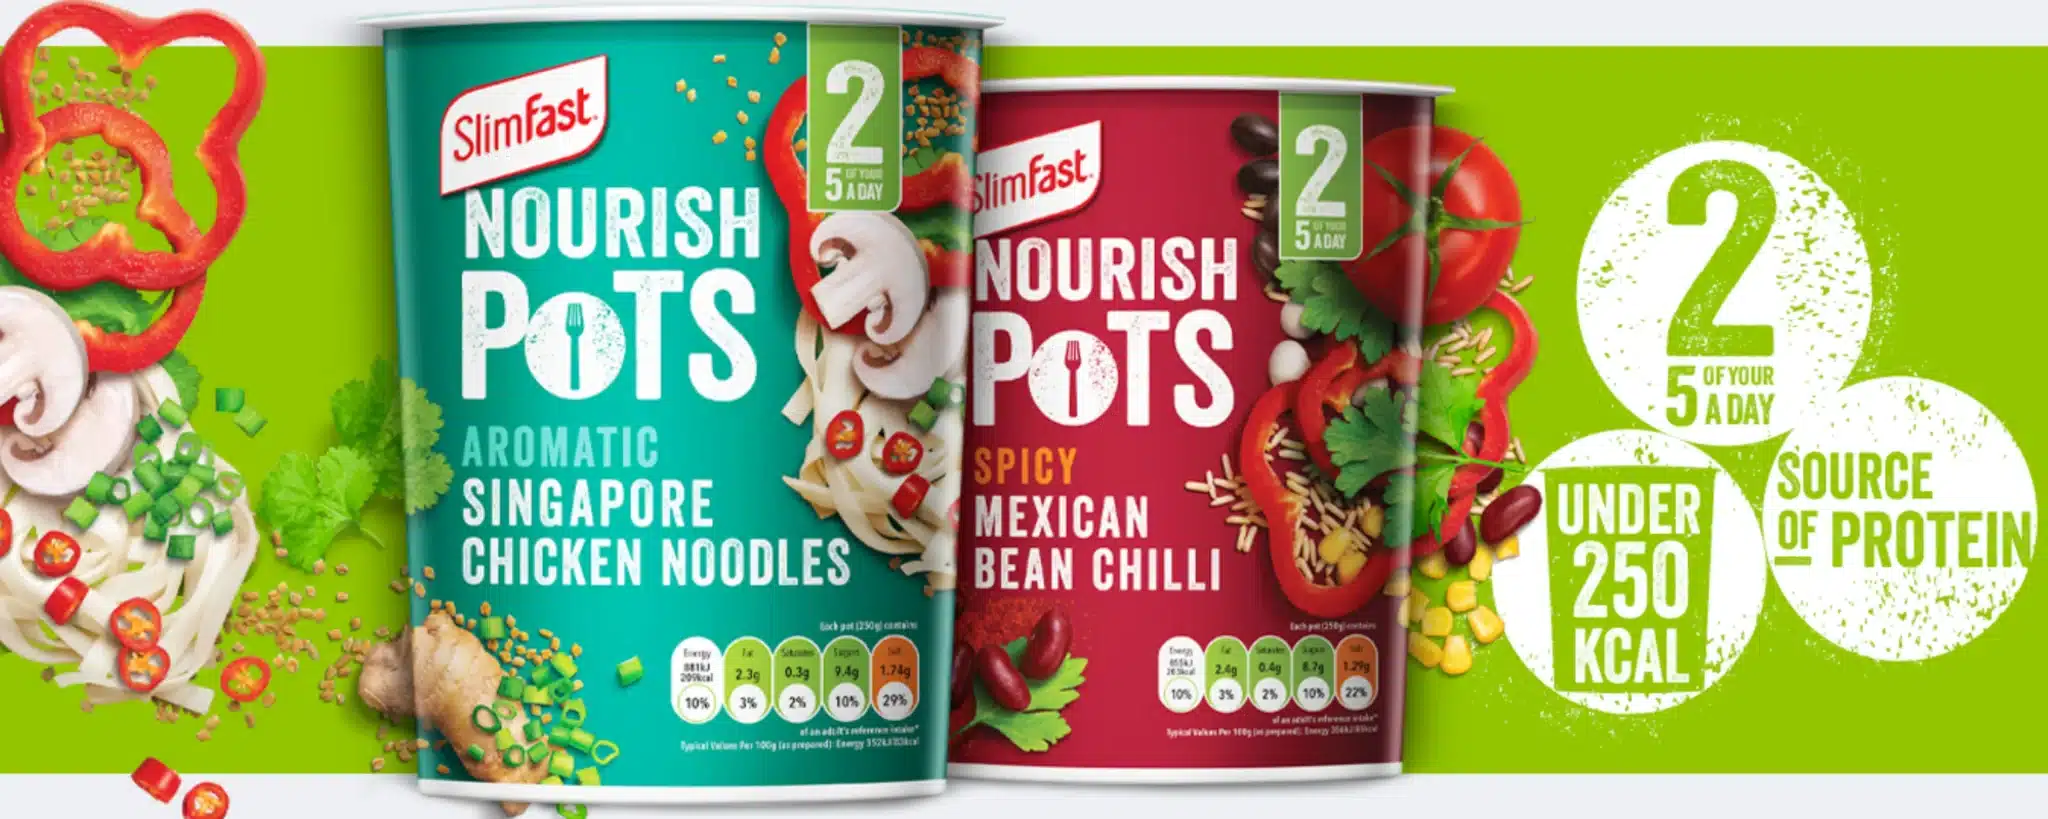 slimfast-nourish-pots